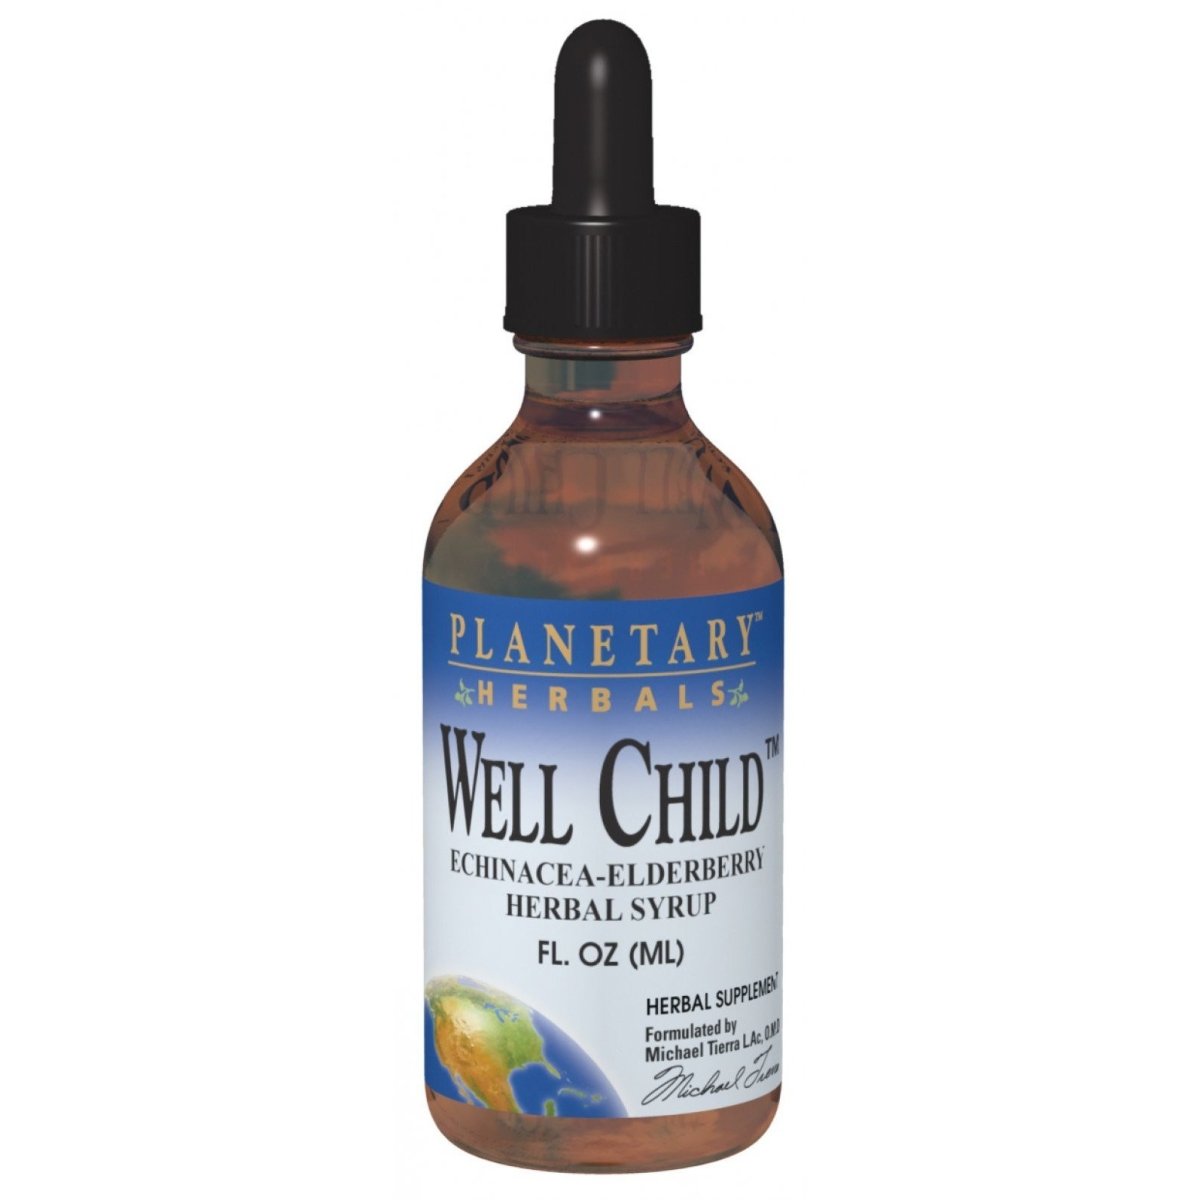 Well Child - Echinacea-Elderberry - Herbal Syrup - 2oz